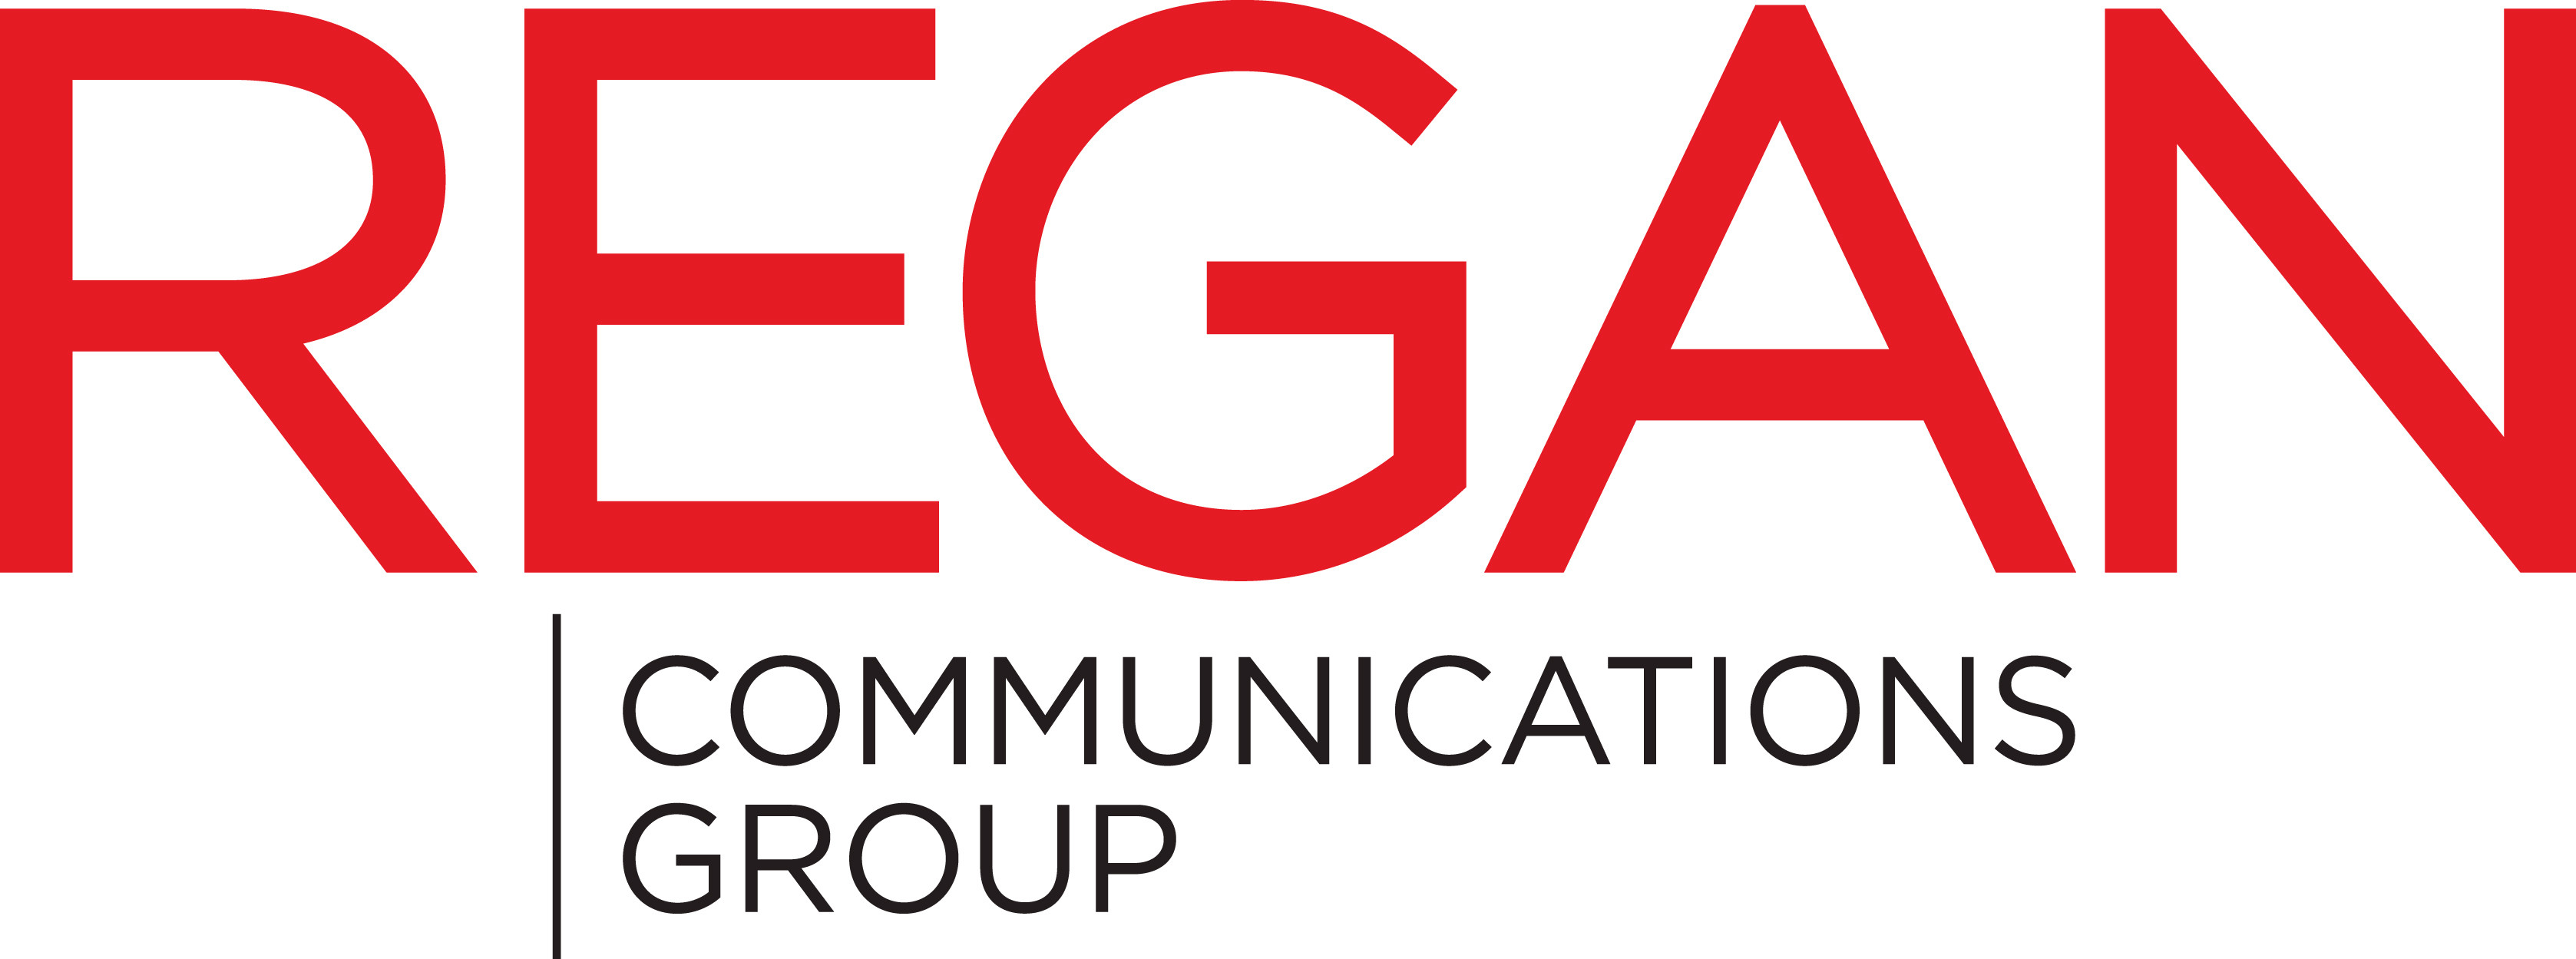  Top PR Business Logo: Regan Communications Group